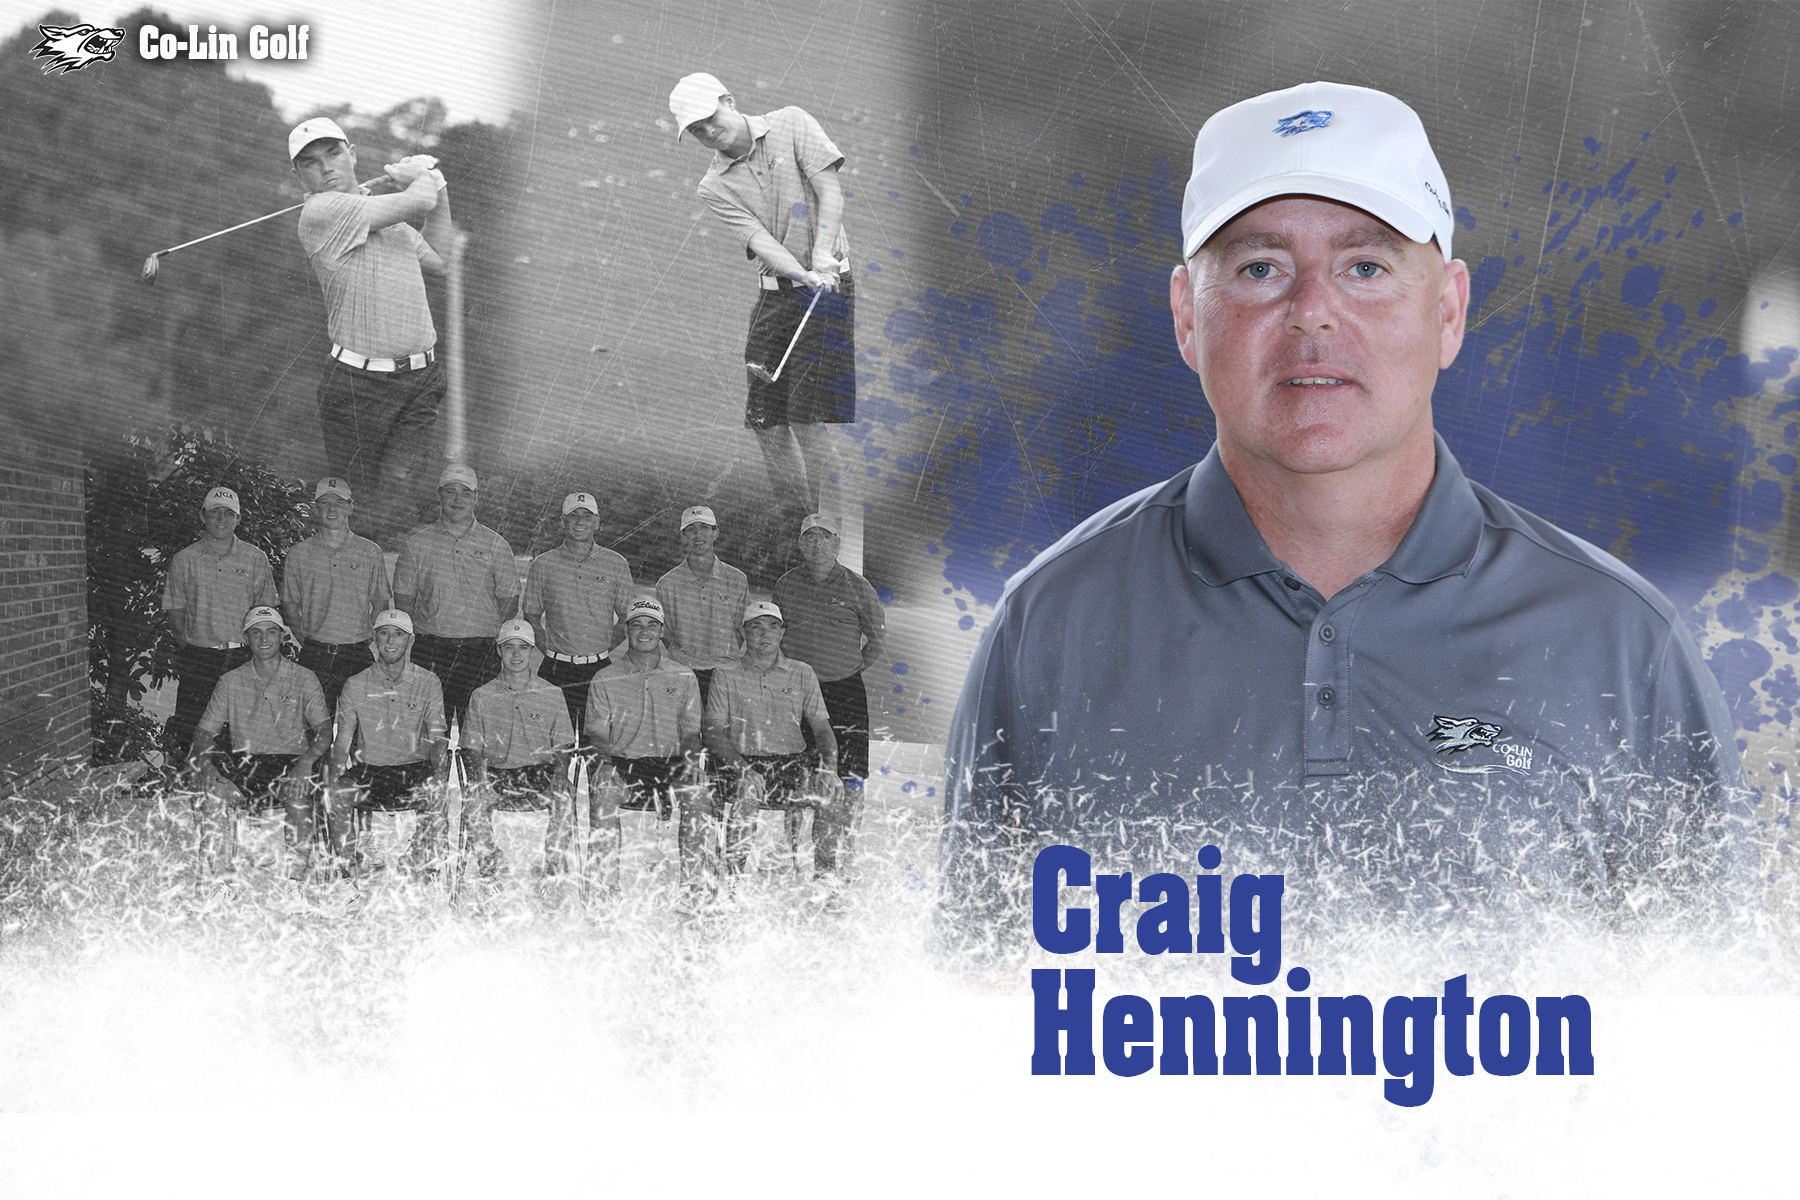 Hennington takes reigns of Co-Lin golf team